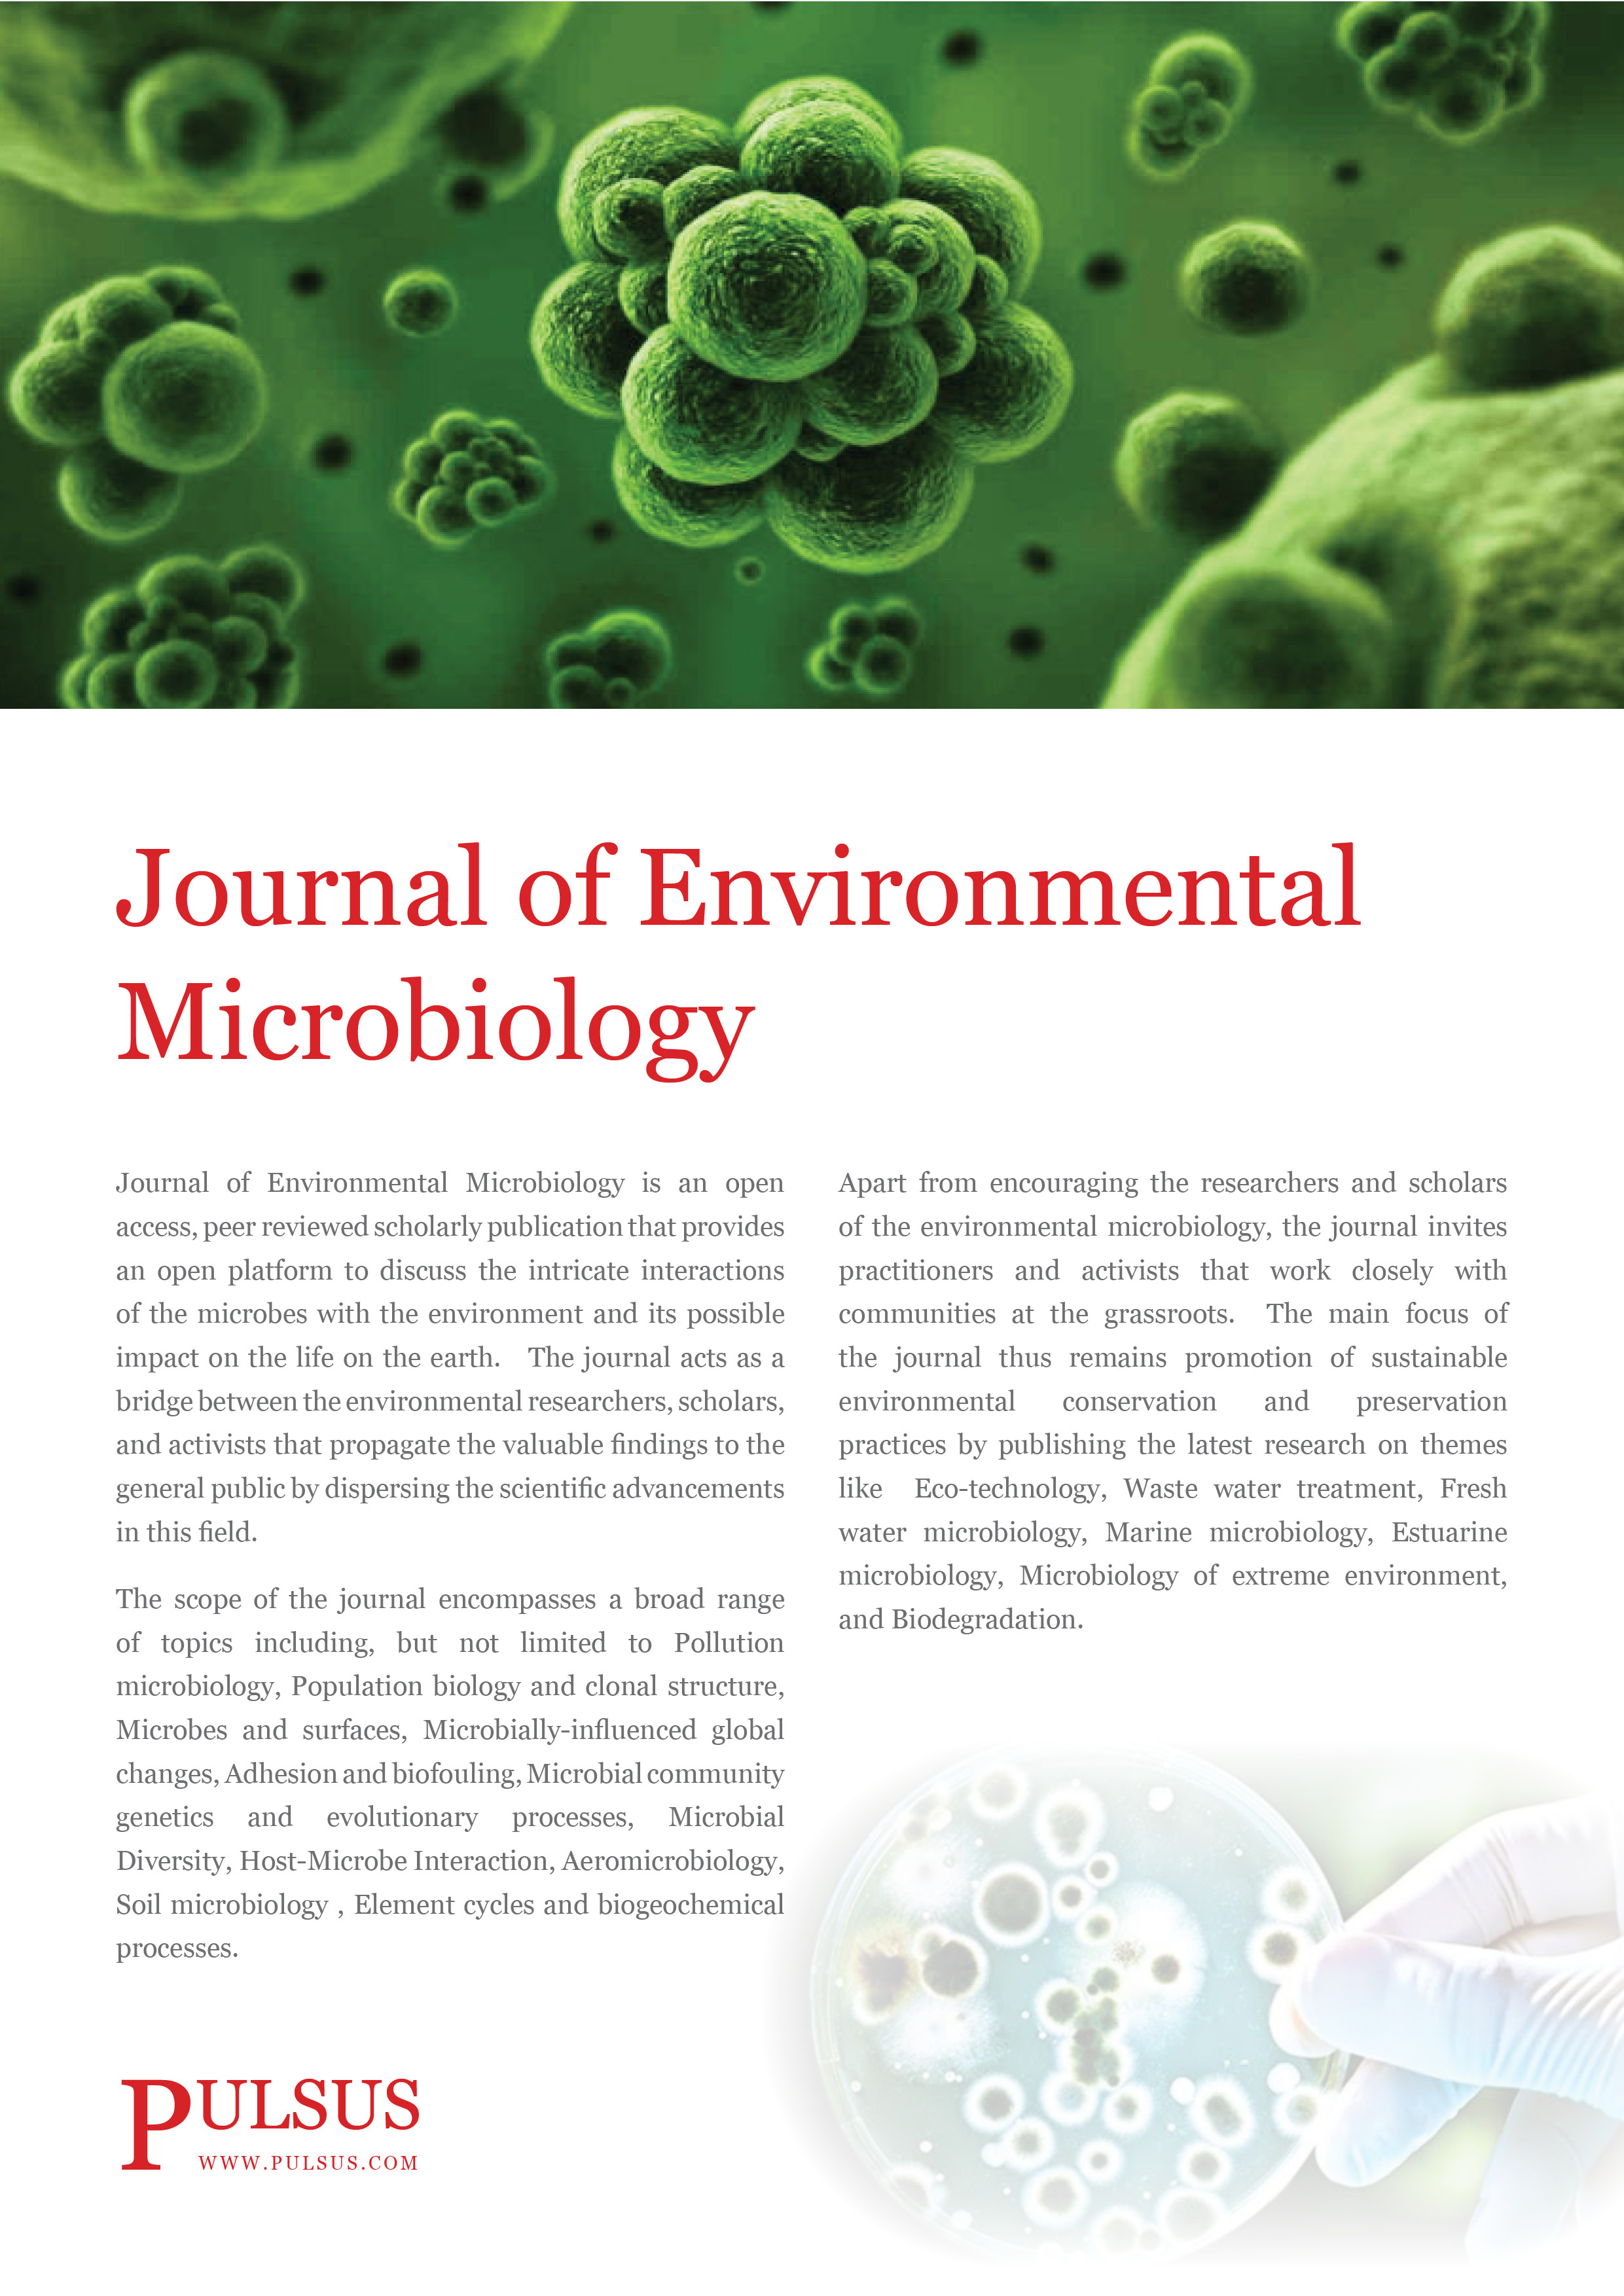 Microbe research topics